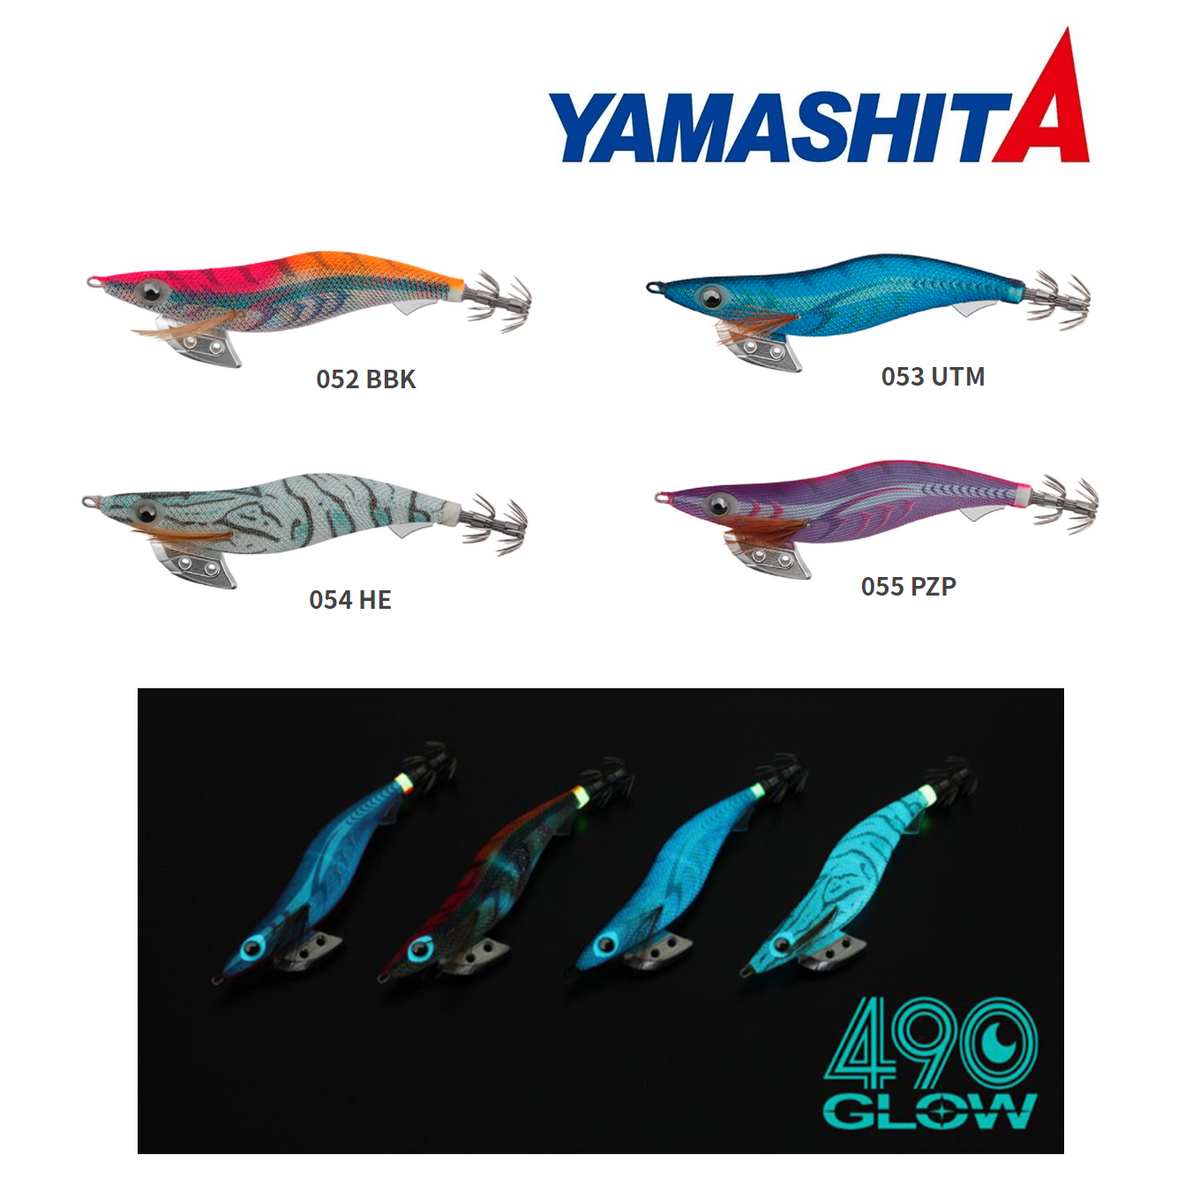 Yamashita Egi-Oh K 490GLOW Squid Jig Size #3.5